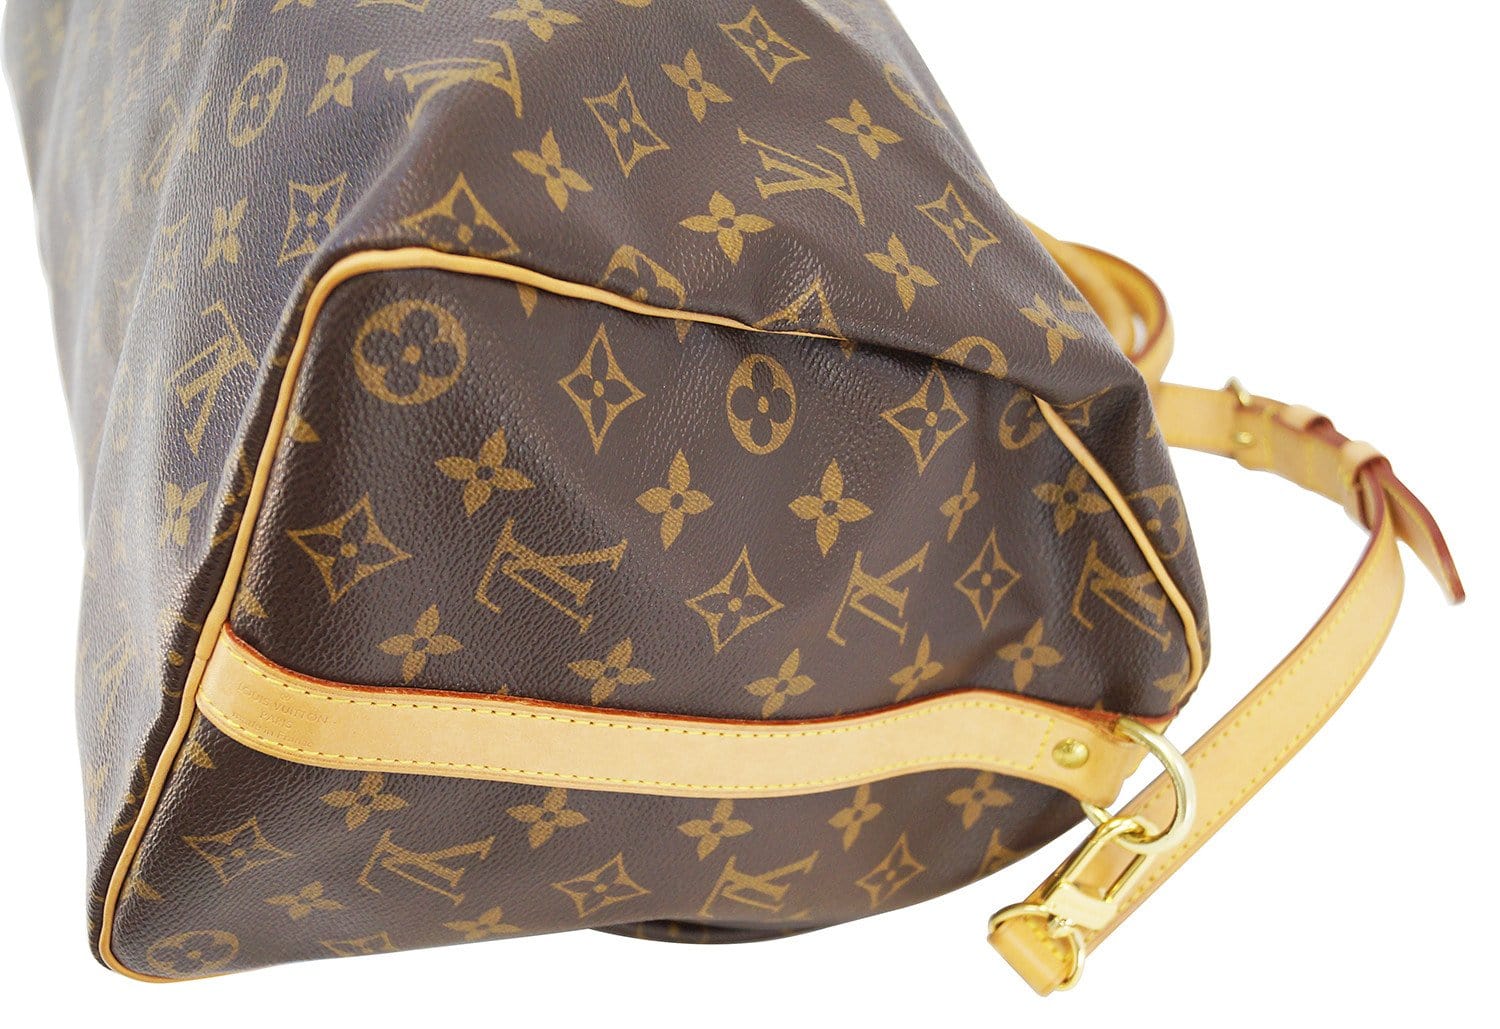 Customized Louis Vuitton Speedy 40 handbag in Monogram canvas